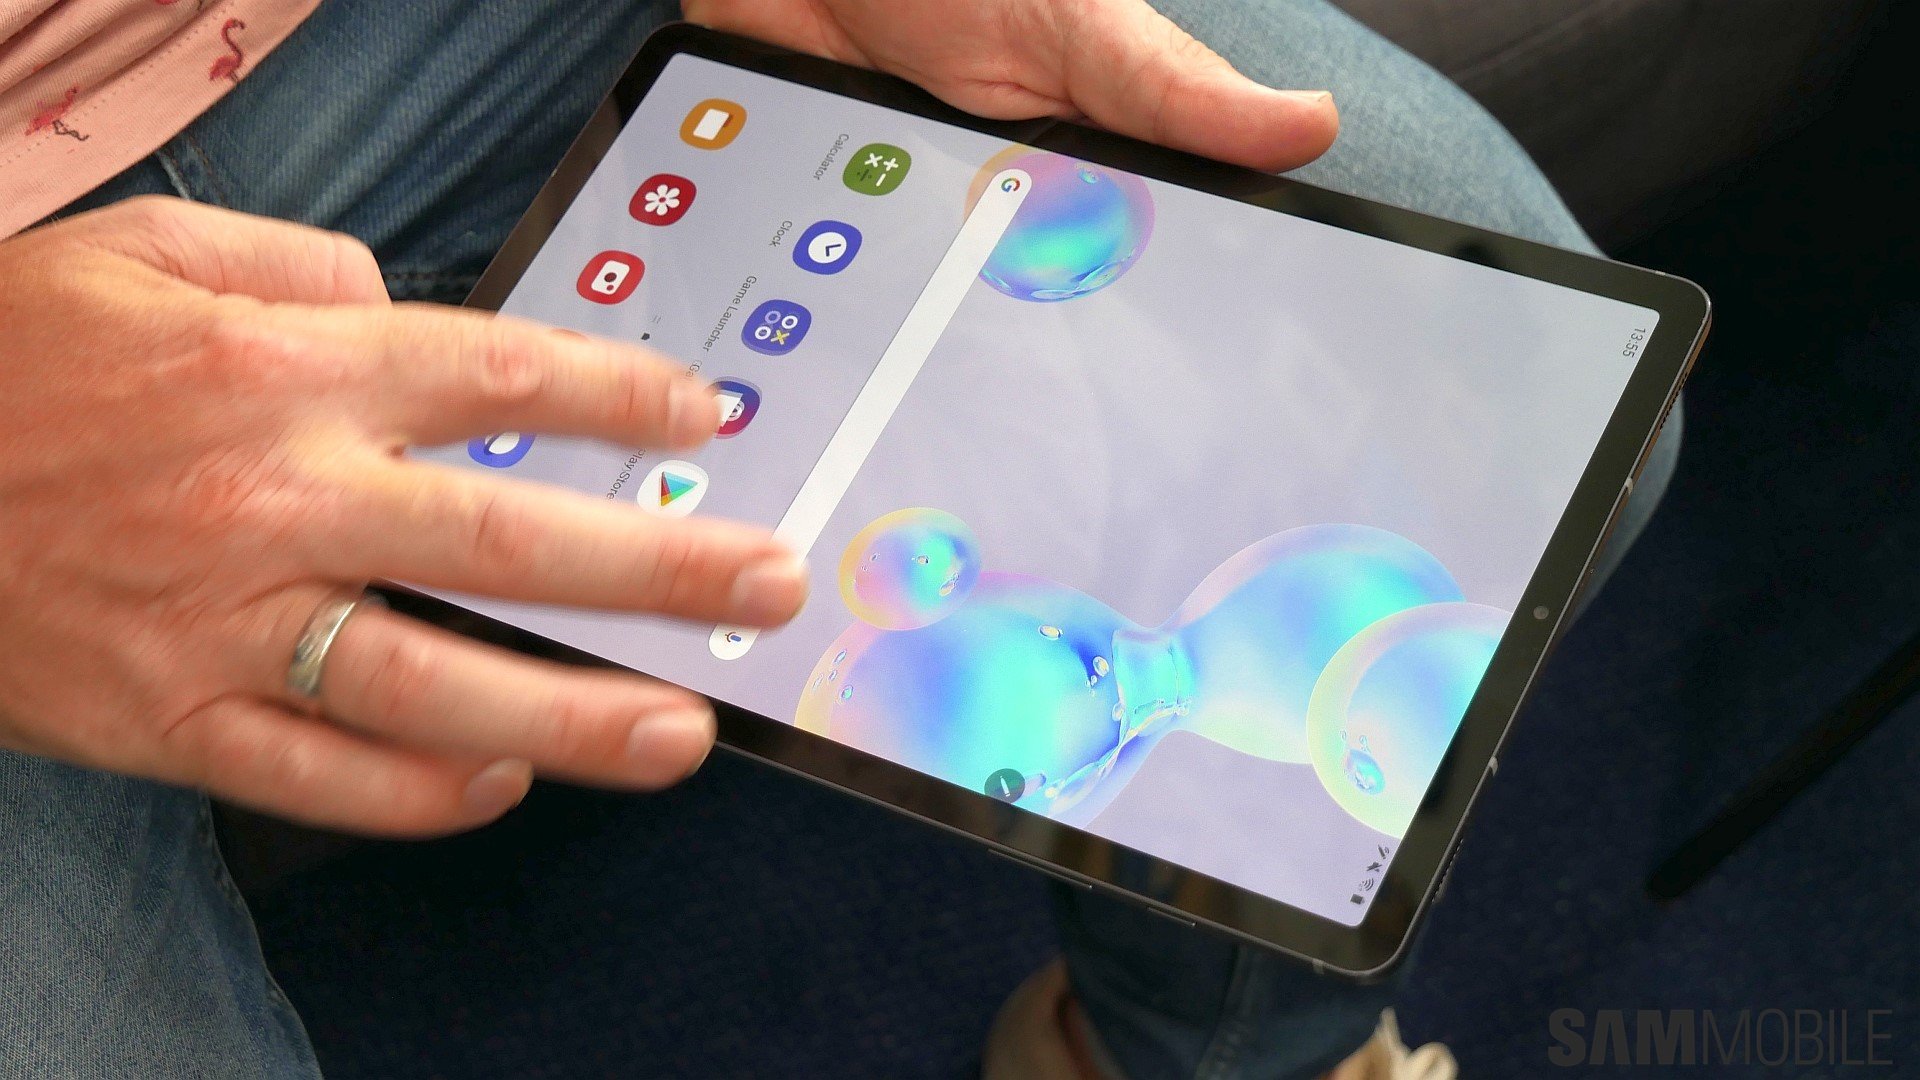 Samsung Galaxy Tab S6 incelemesi: 2019'daki en iyi Android tablet 13